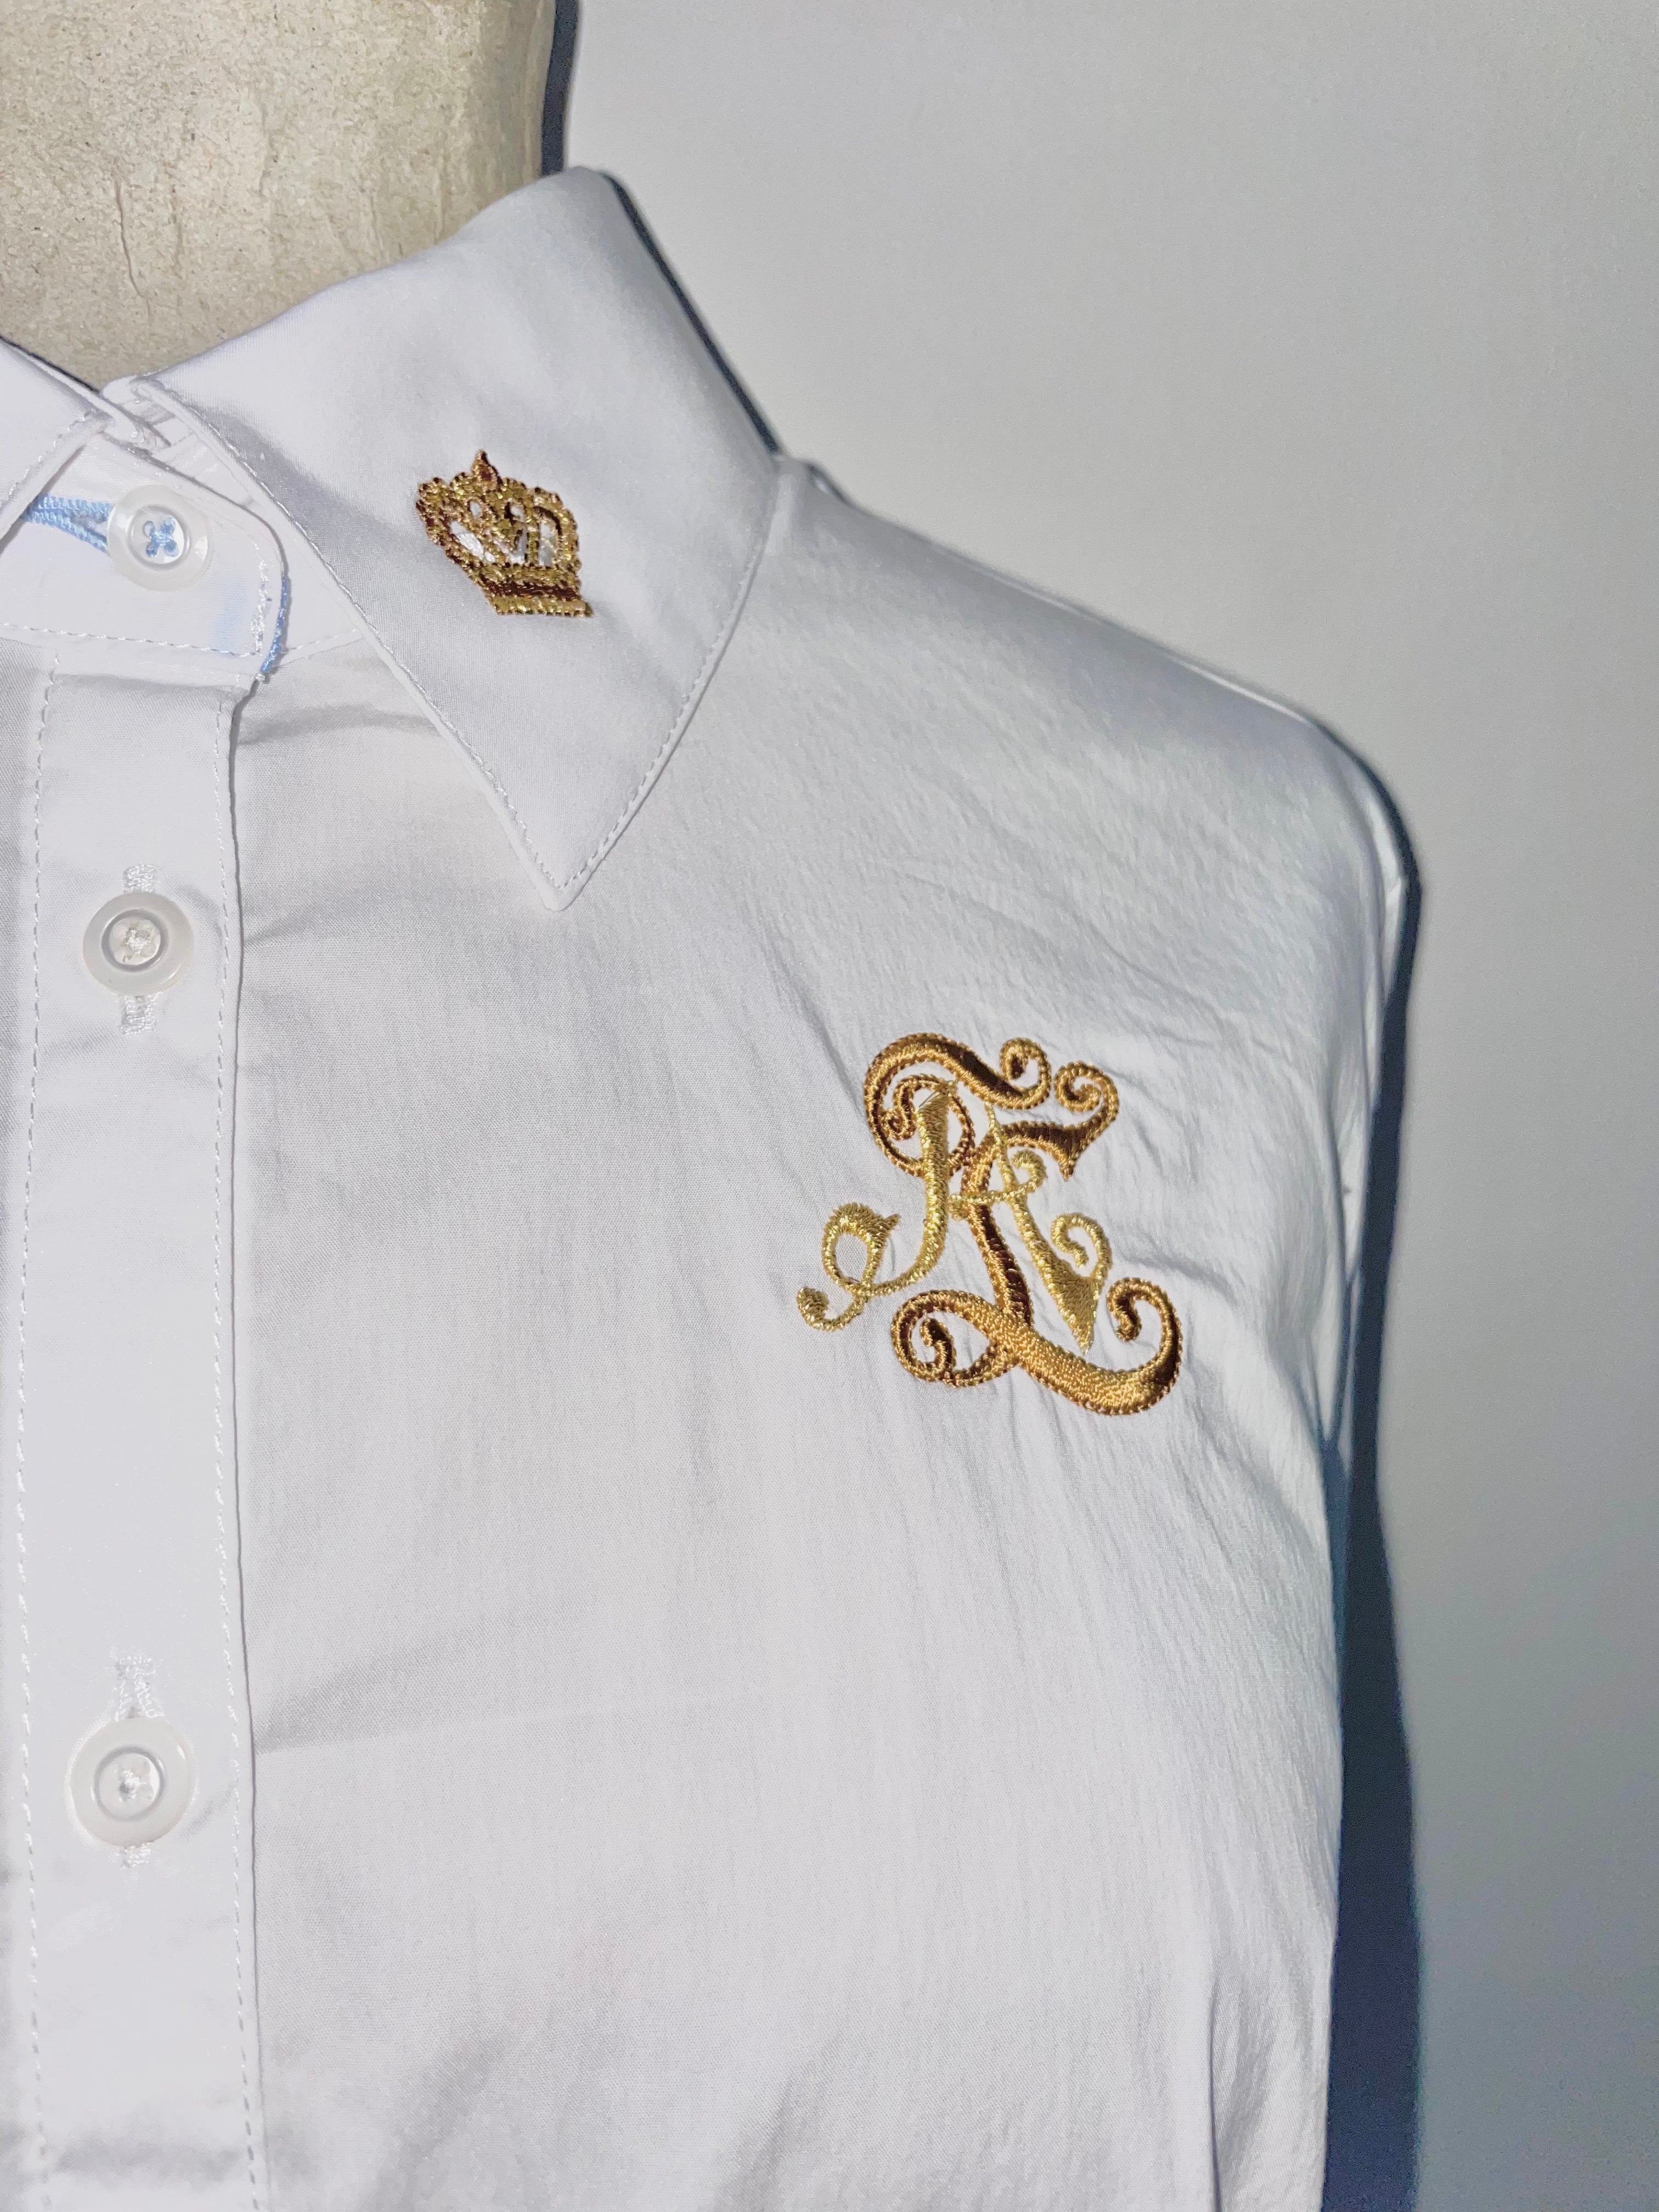 L’Argentina Gold Emblem Embroidered White Shirt